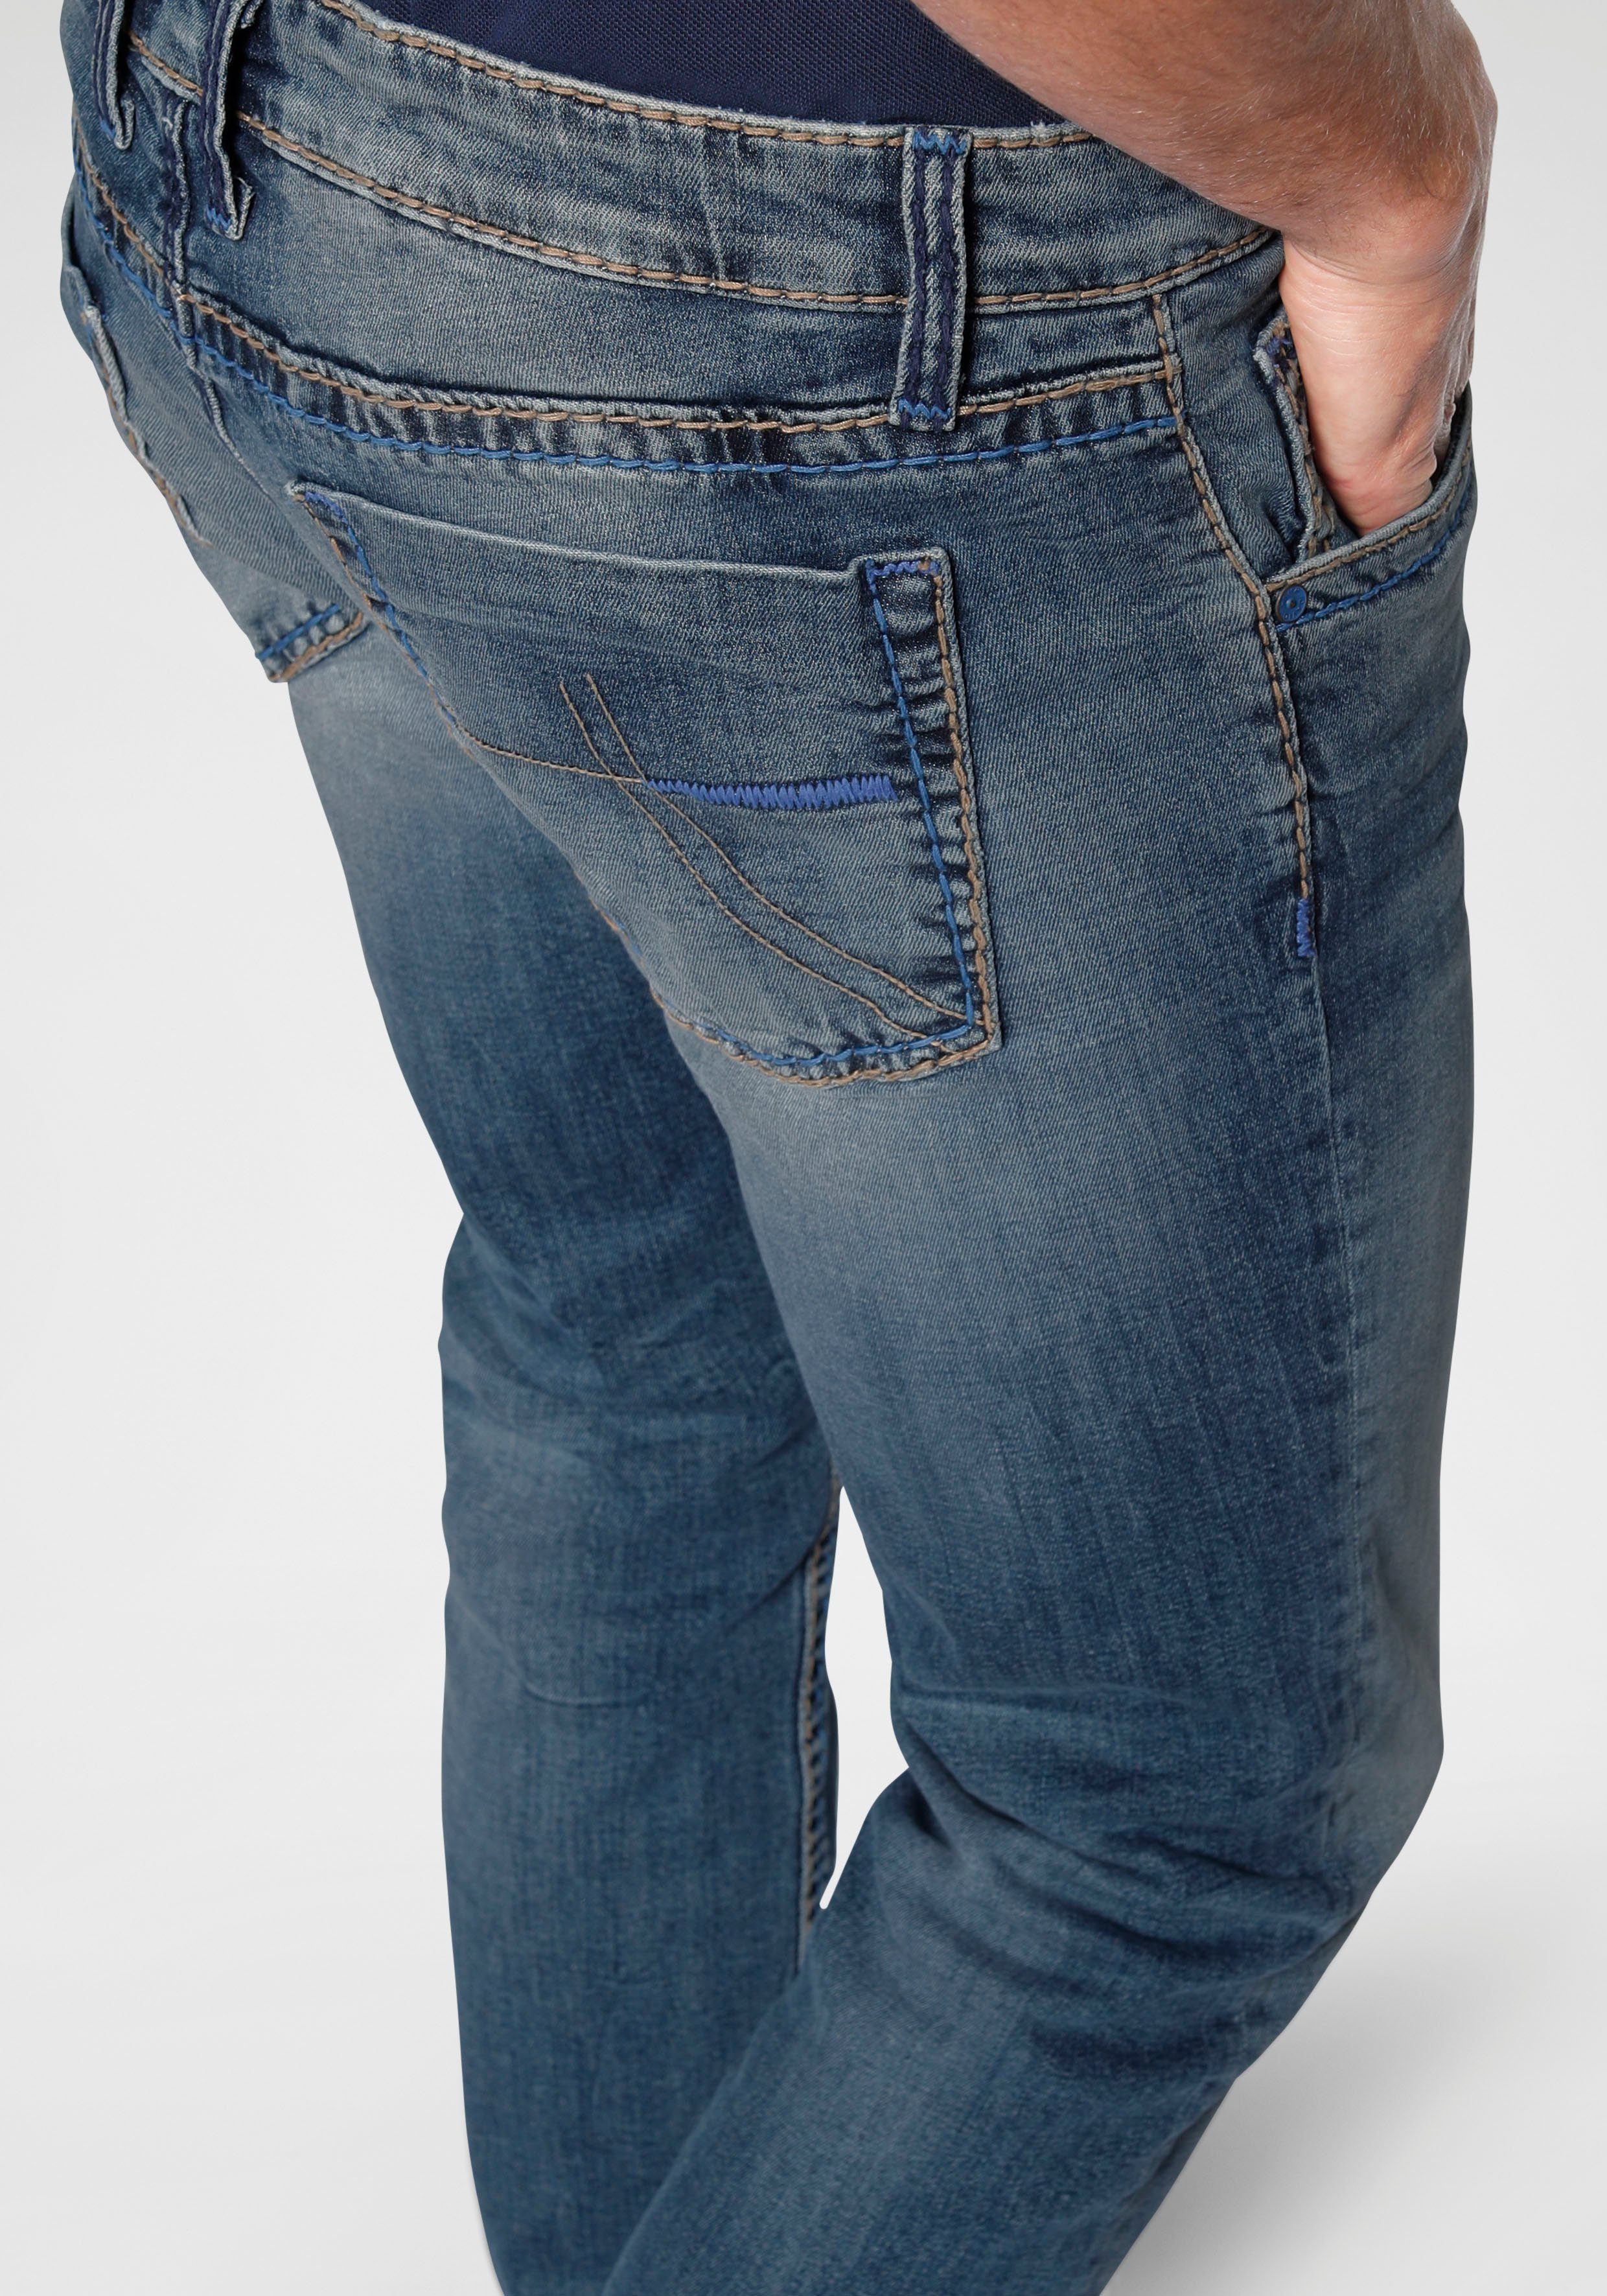 Straight-Jeans Steppnähten dark-used-vintage markanten mit NI:CO:R611 DAVID CAMP